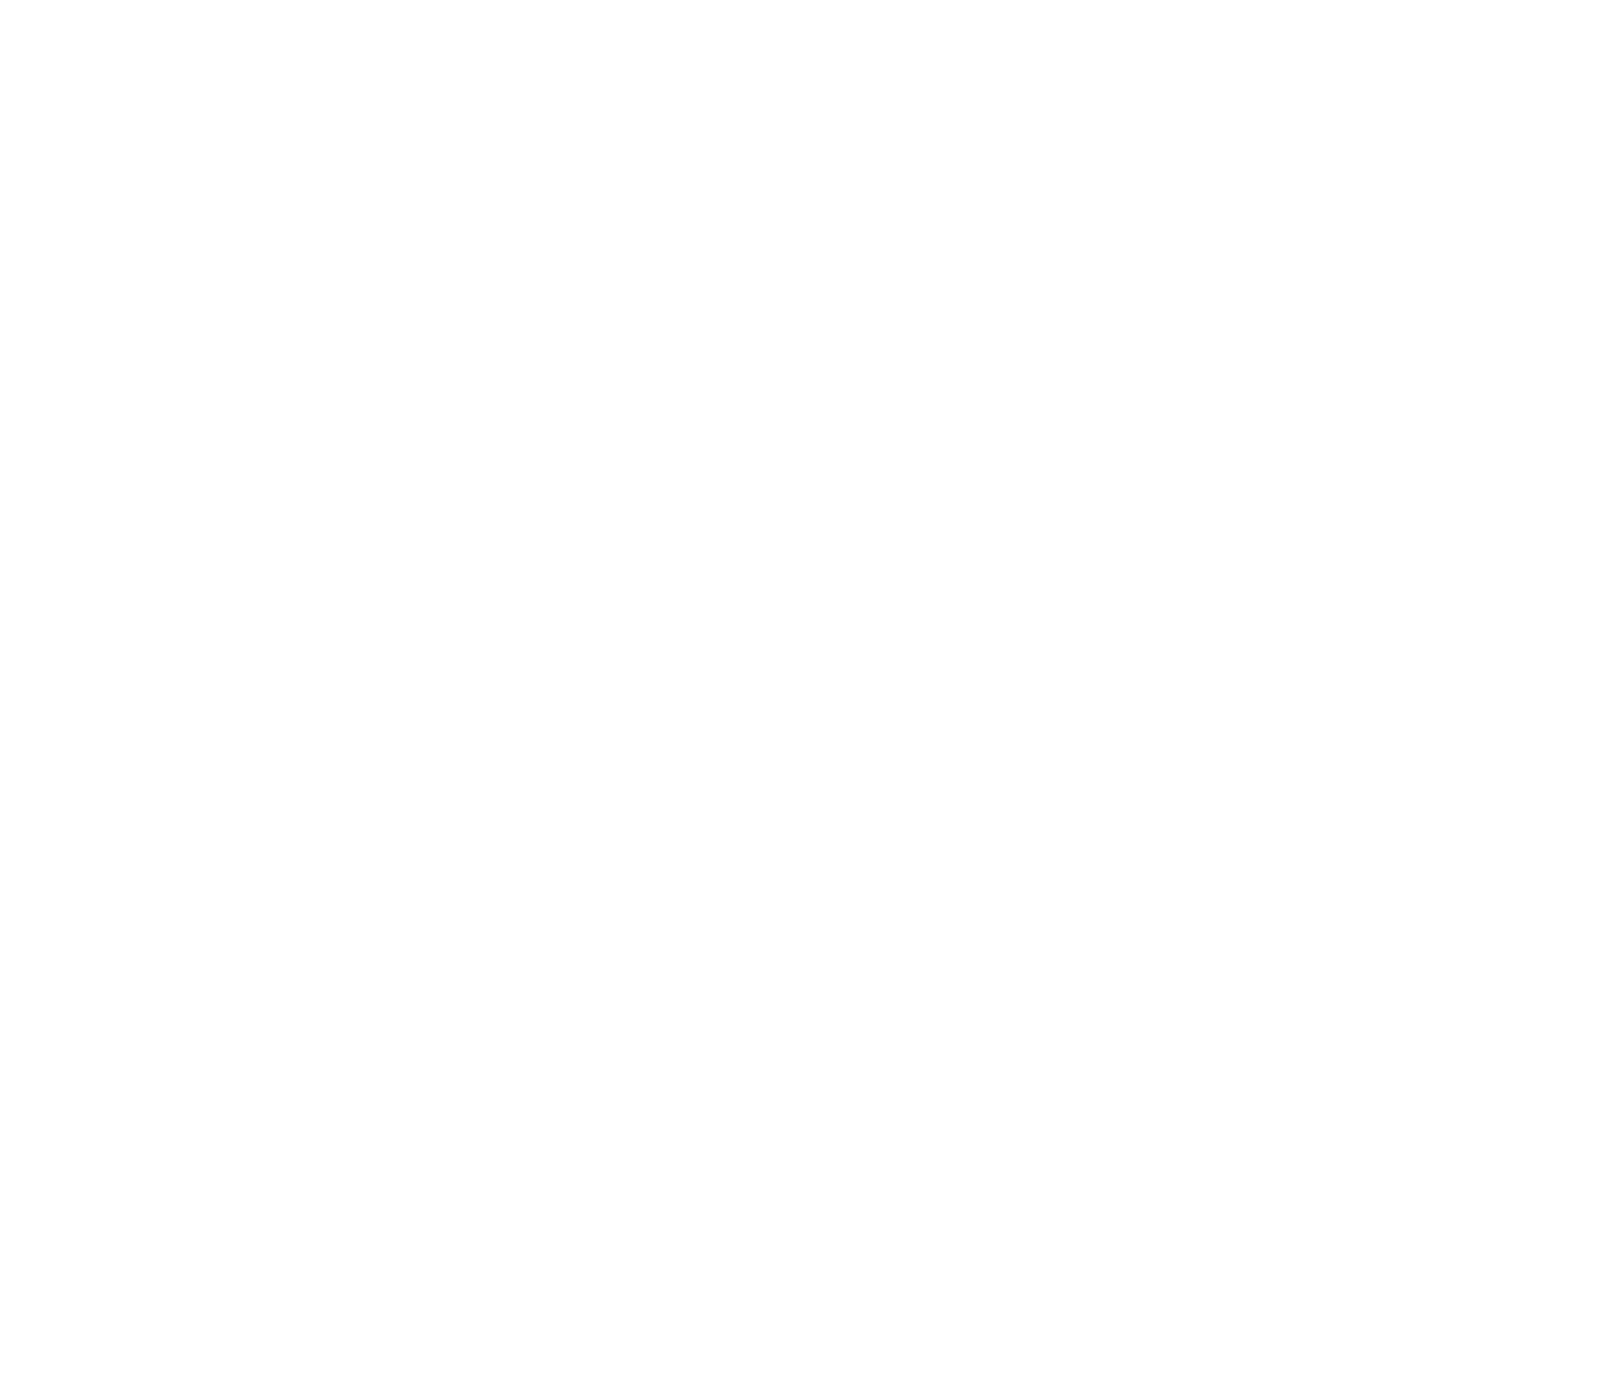 True Cheasapeake Oyser